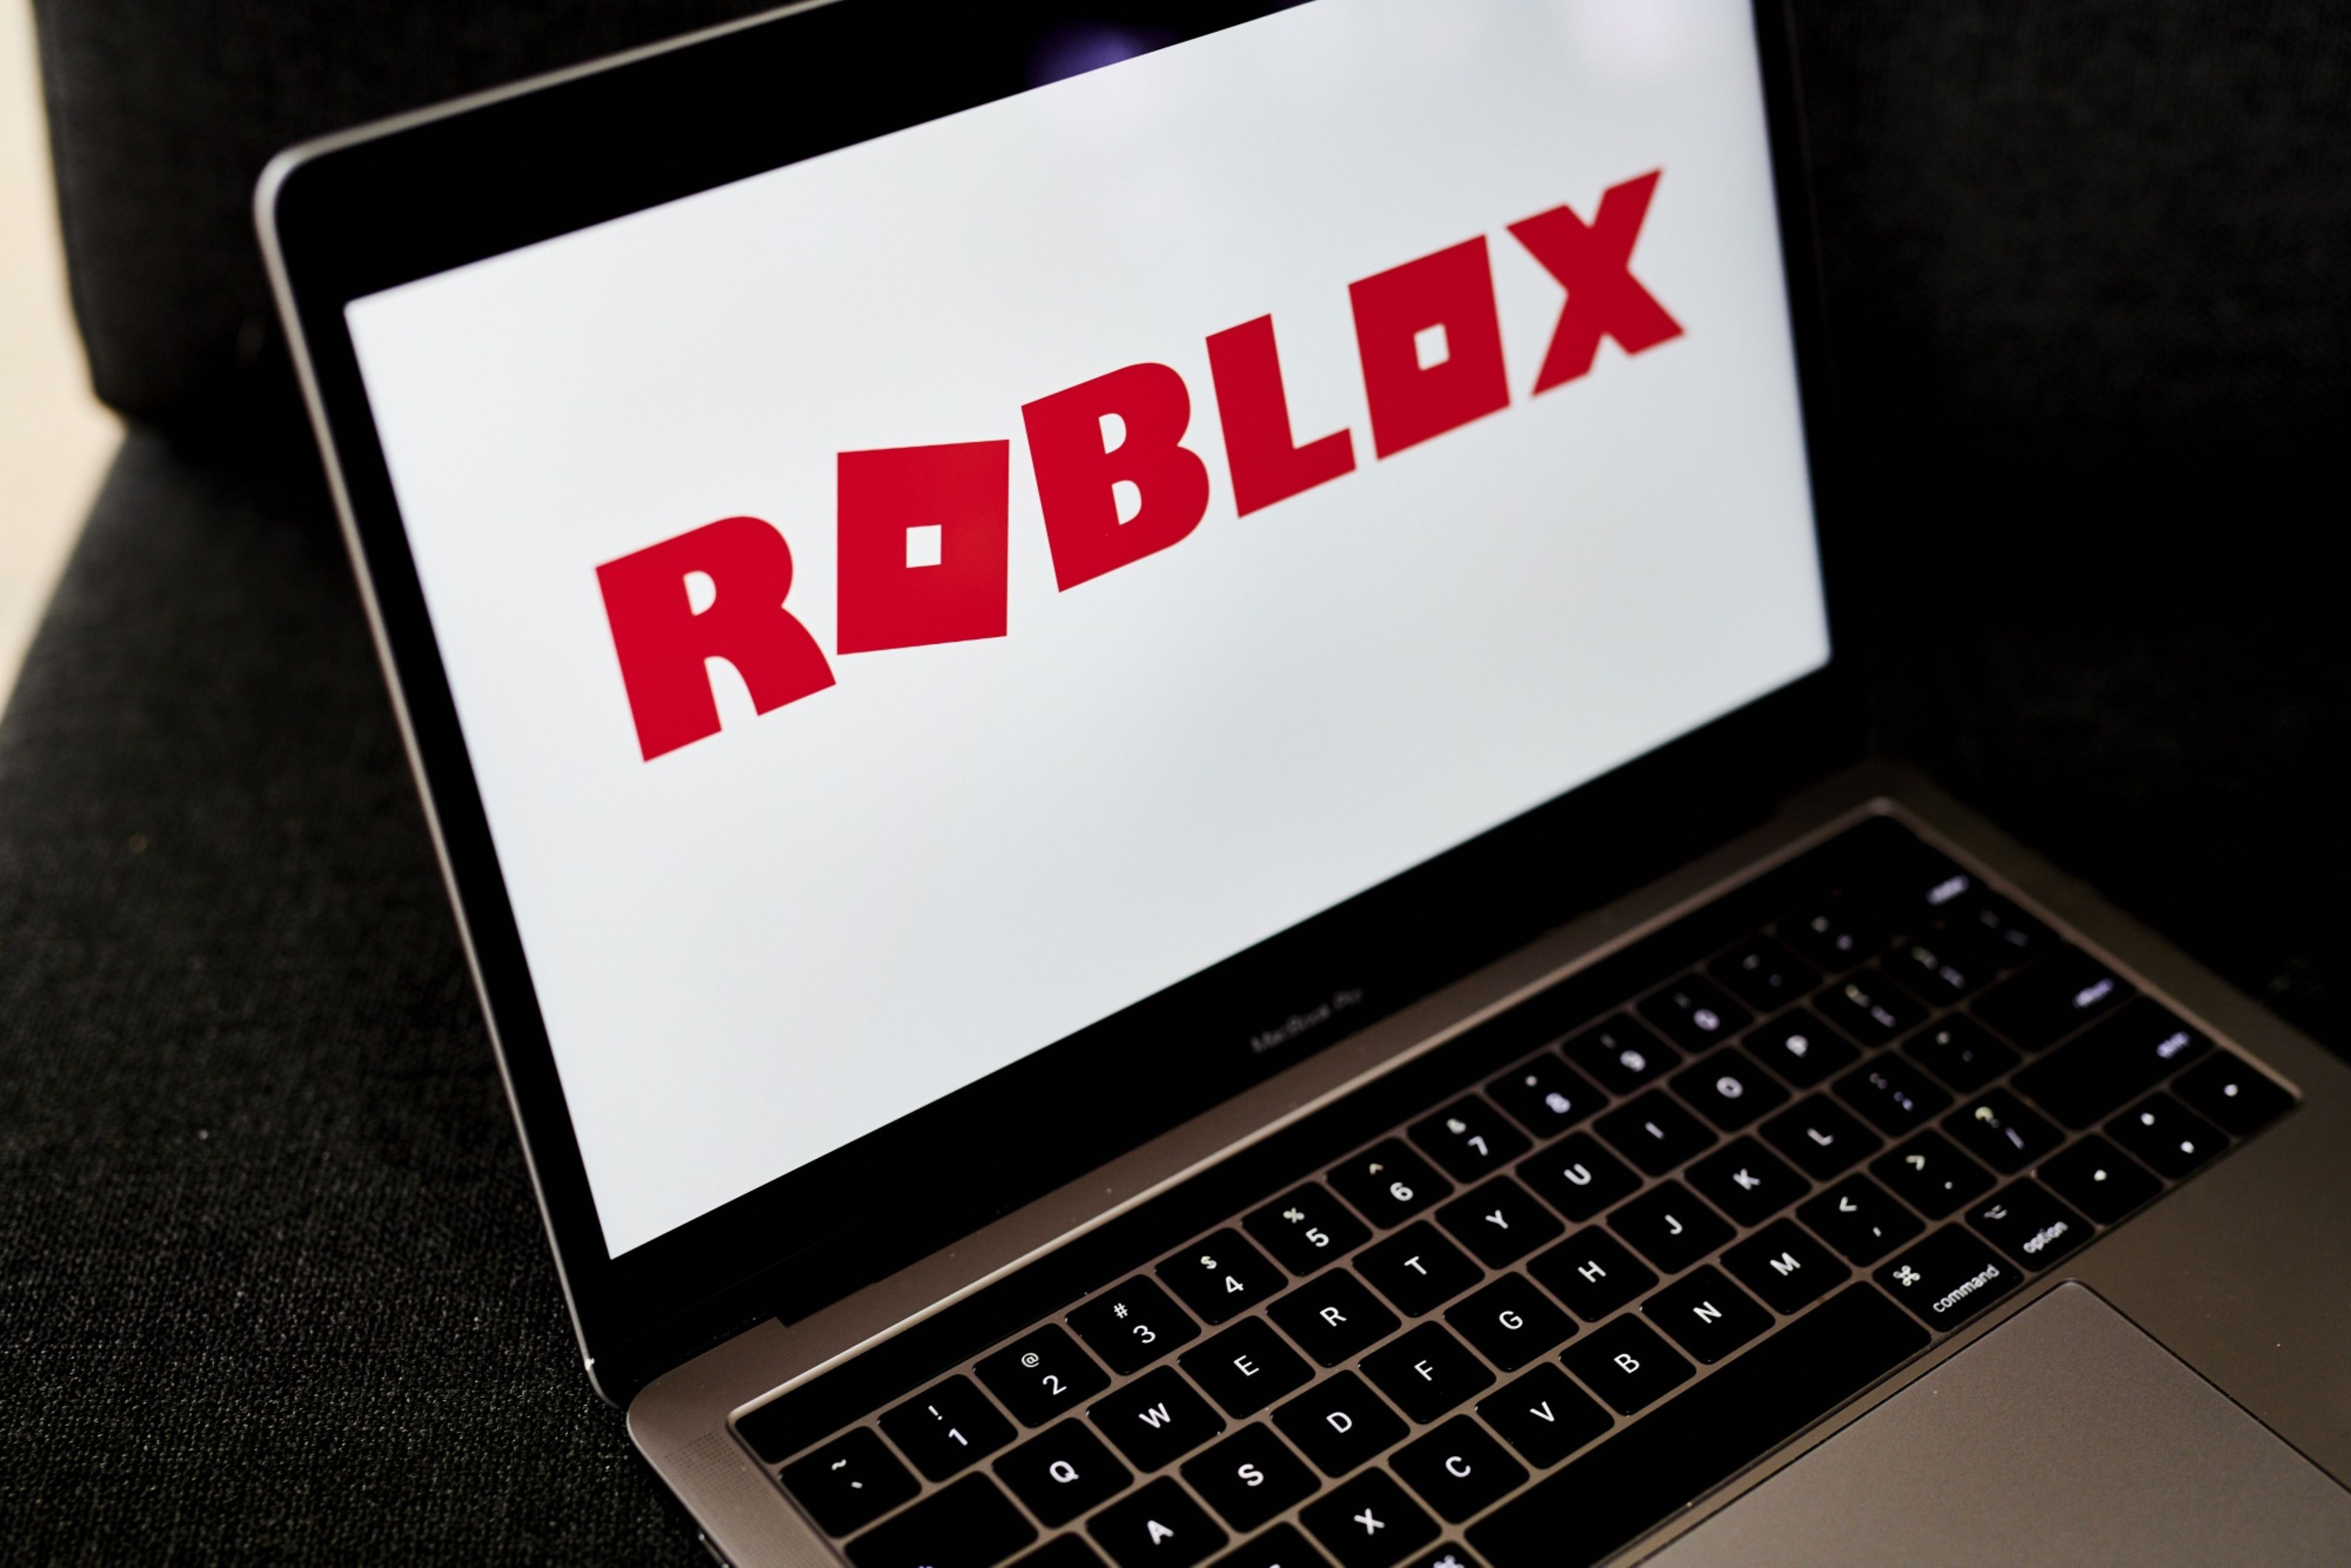 Roblox' Founder David Baszucki Enters The Billionaires Club